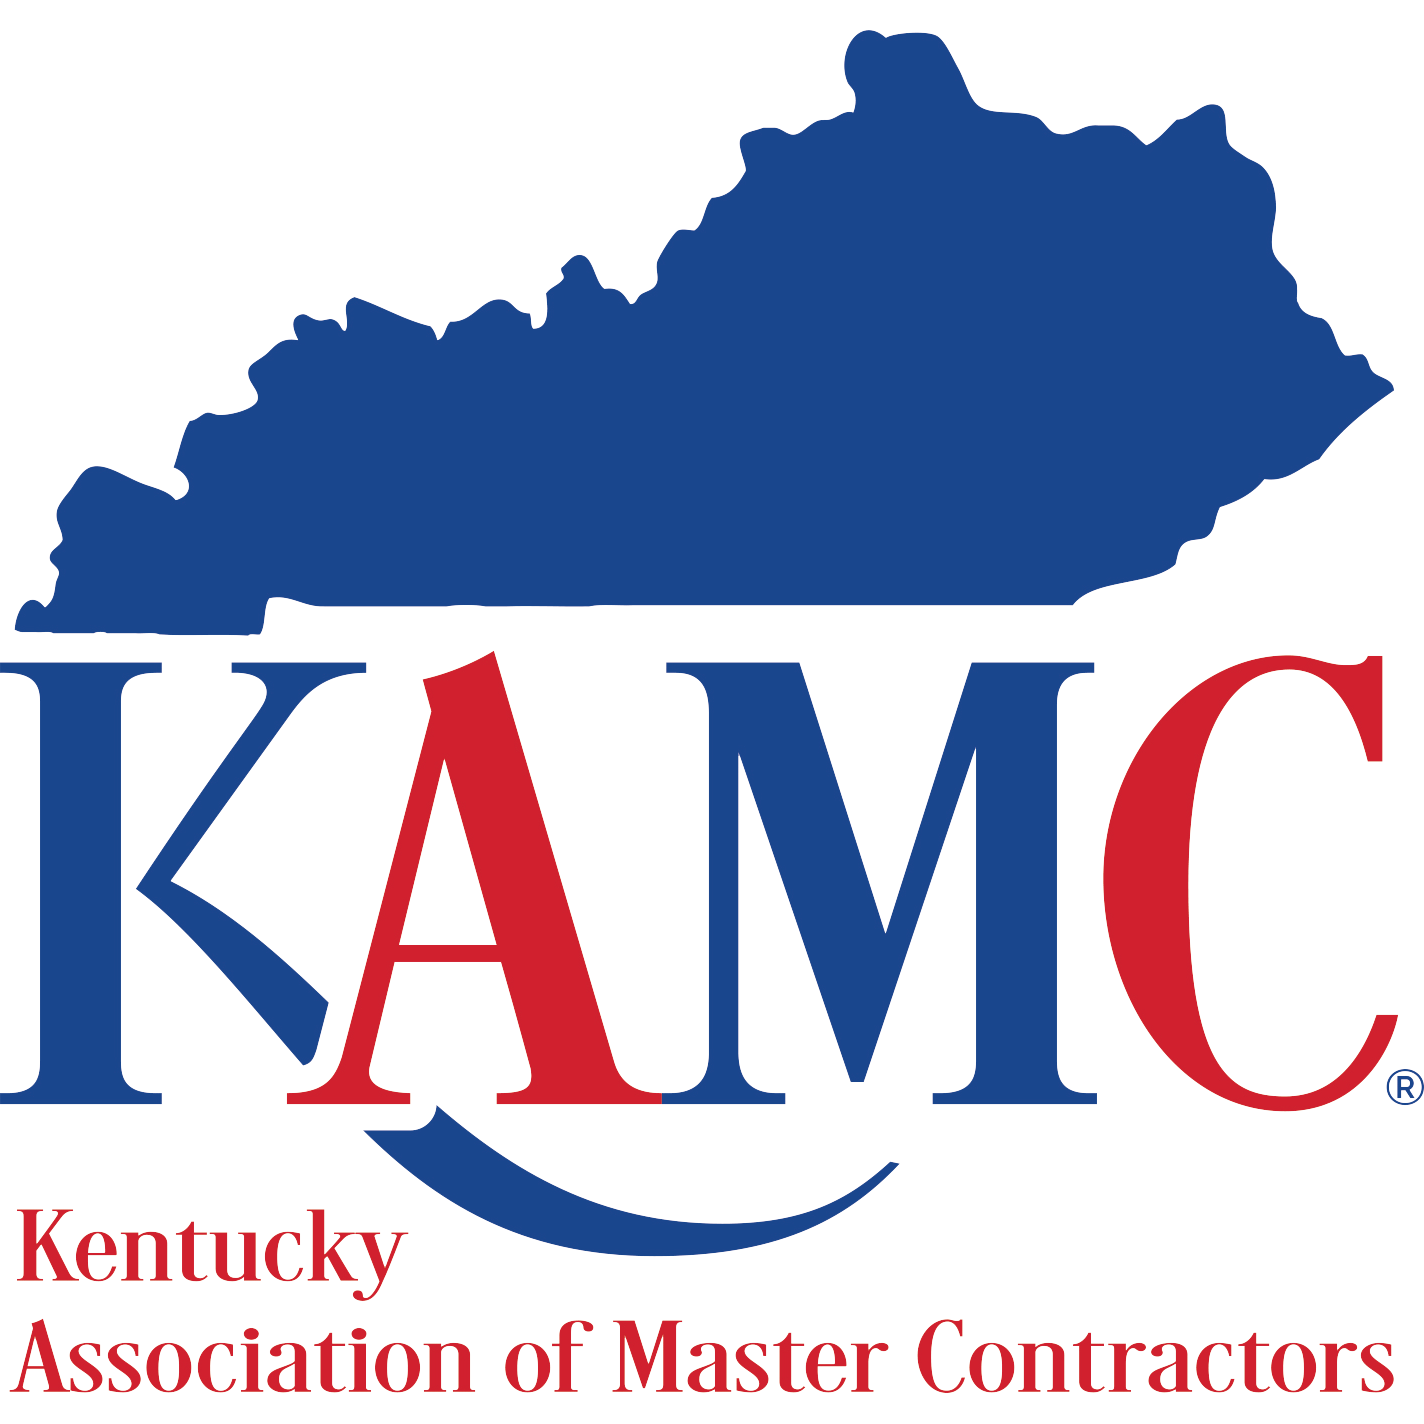 Kentucky Association of Master Contractors logo